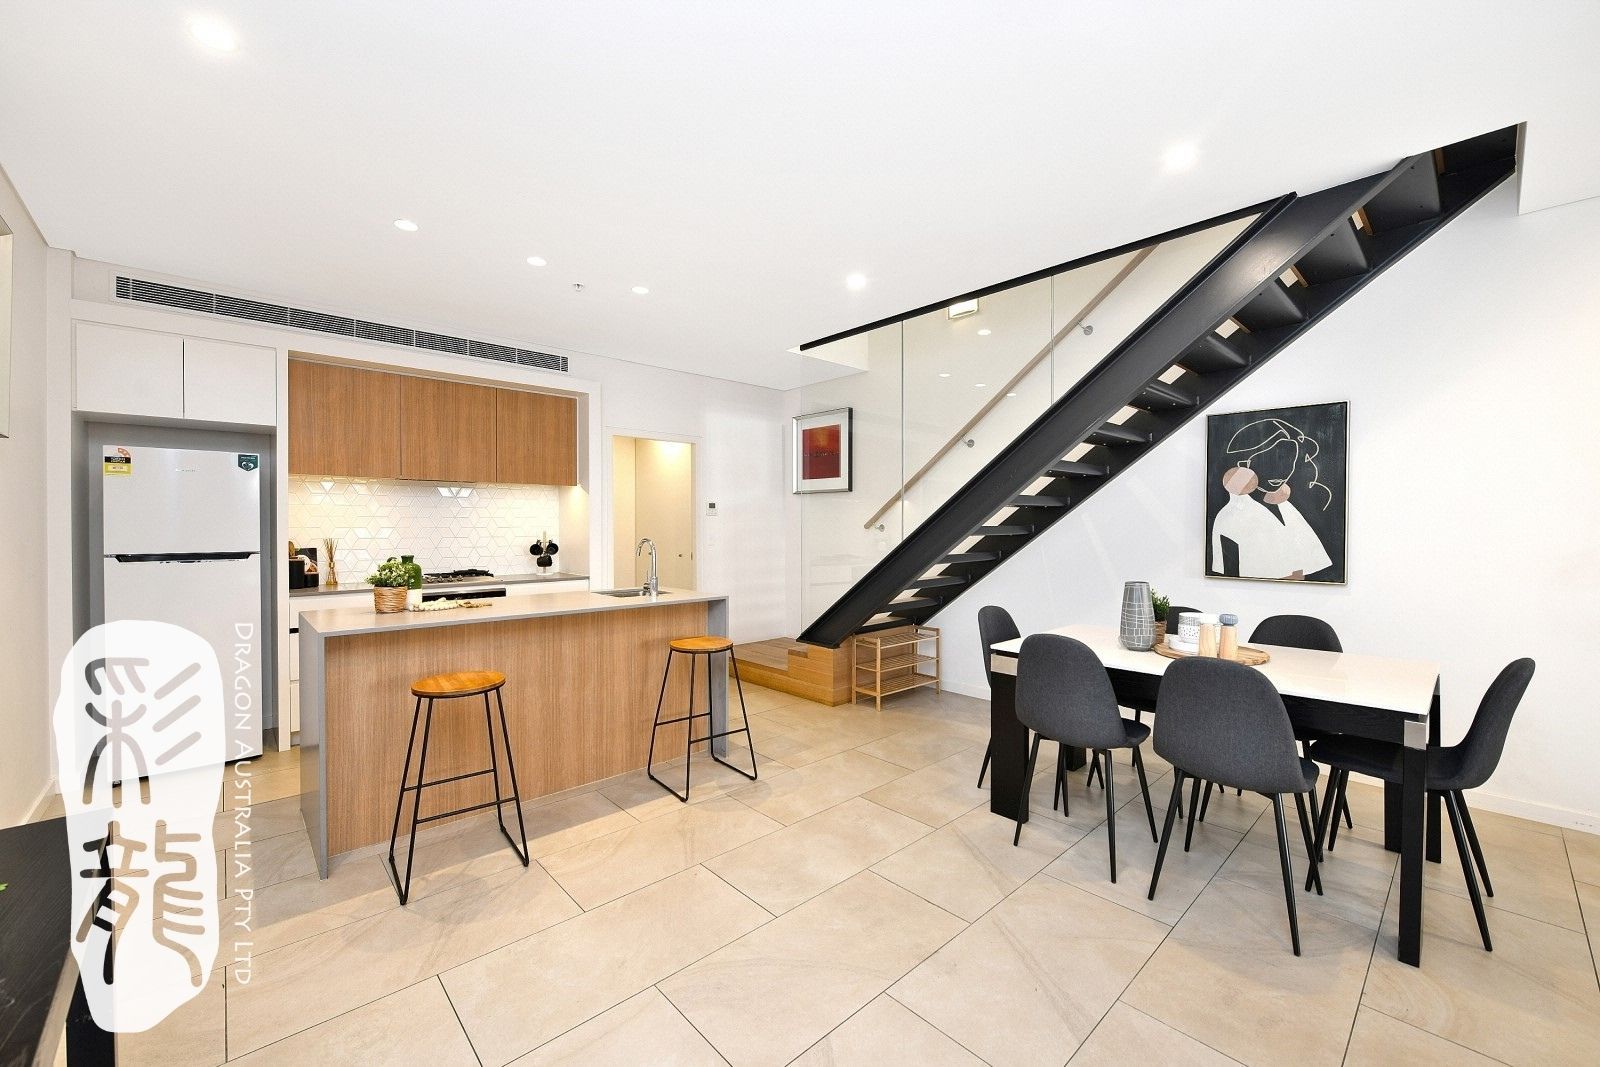 2 bedrooms Terrace in 12A Wentworth Street GLEBE NSW, 2037